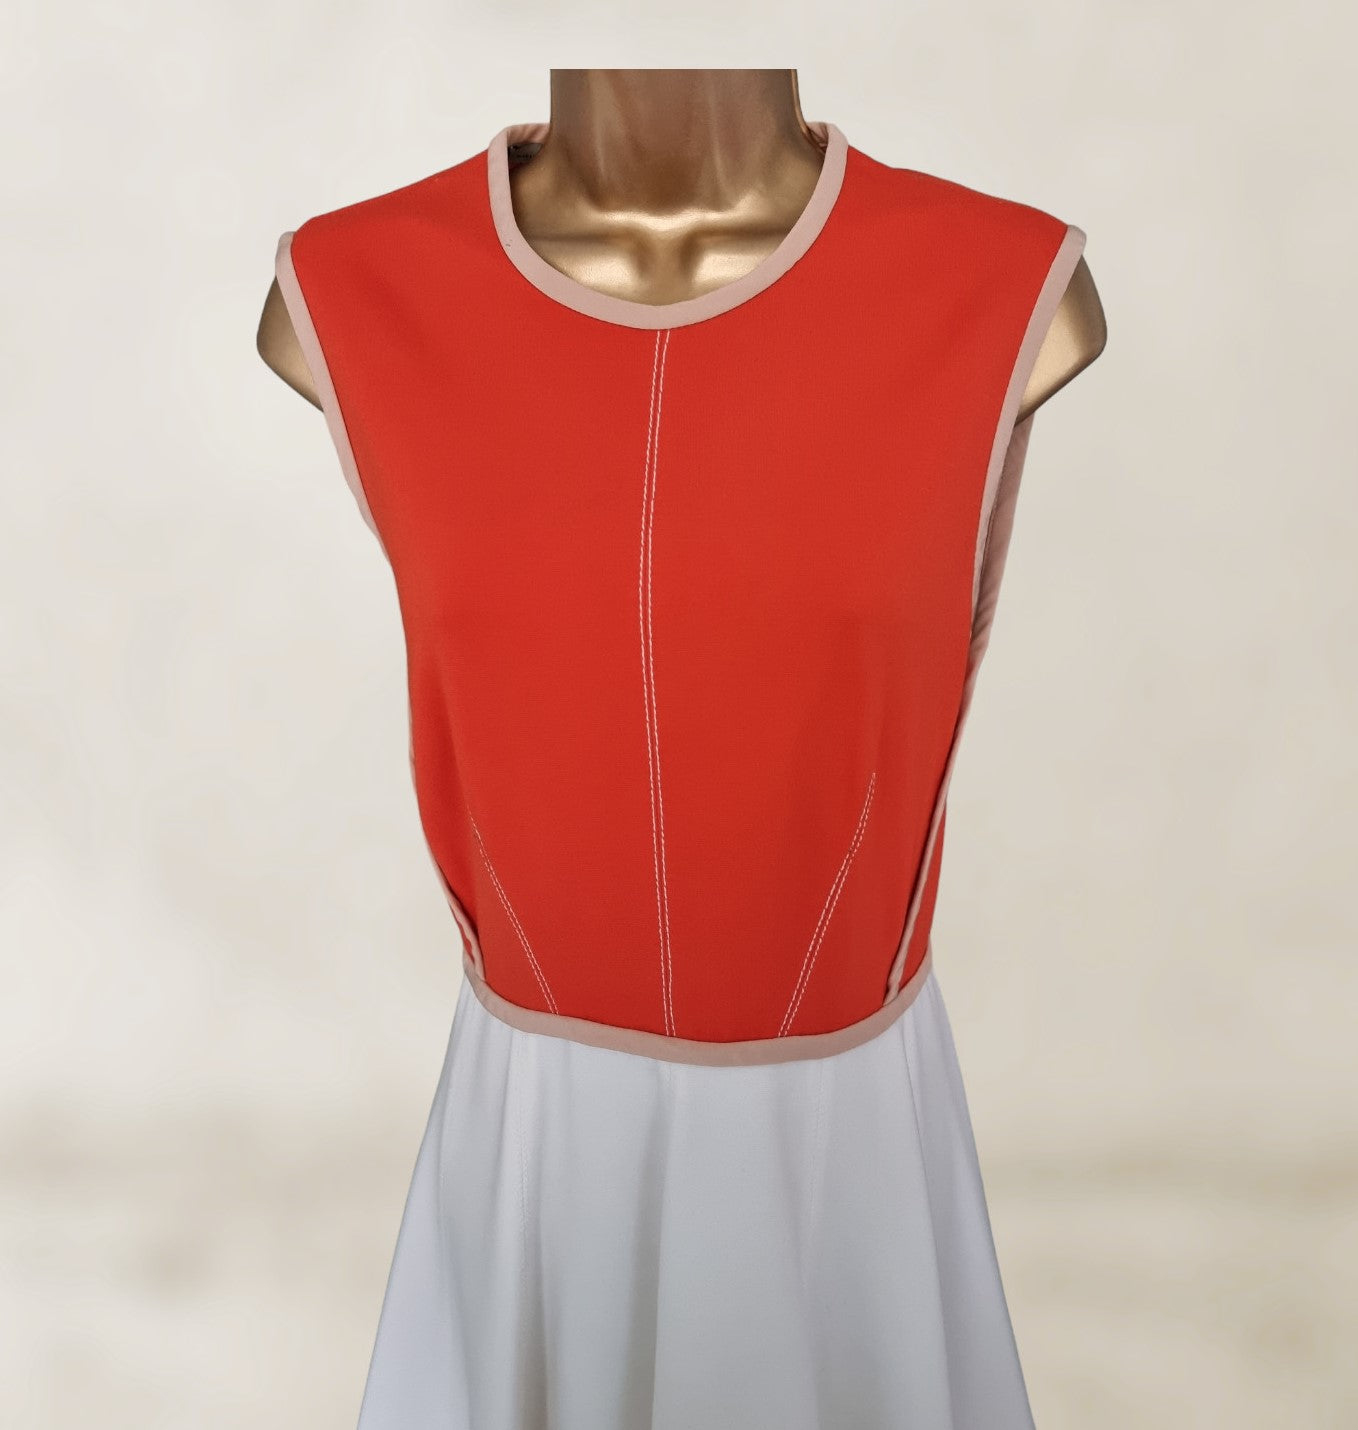 Aquilano Rimondi Womens Orange and White Fit and Flare Dress UK 8 US 4 EU 36 IT 40 Timeless Fashions